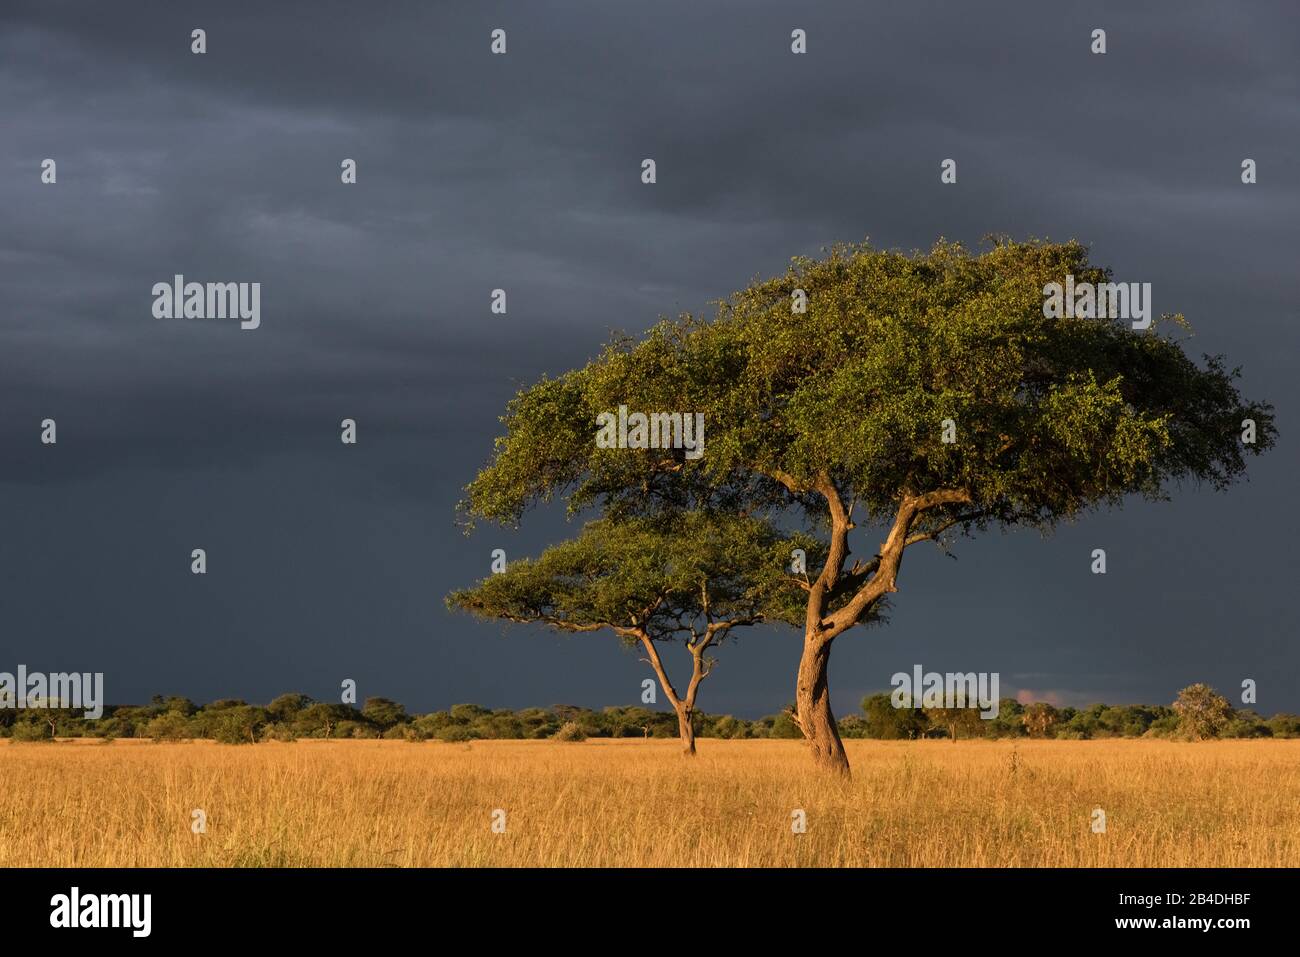 Tanzania, Tanzania Settentrionale, Parco Nazionale Serengeti, Cratere Ngorongoro, Tarangire, Arusha E Lago Manyara, Atmosfera Da Tempesta Foto Stock